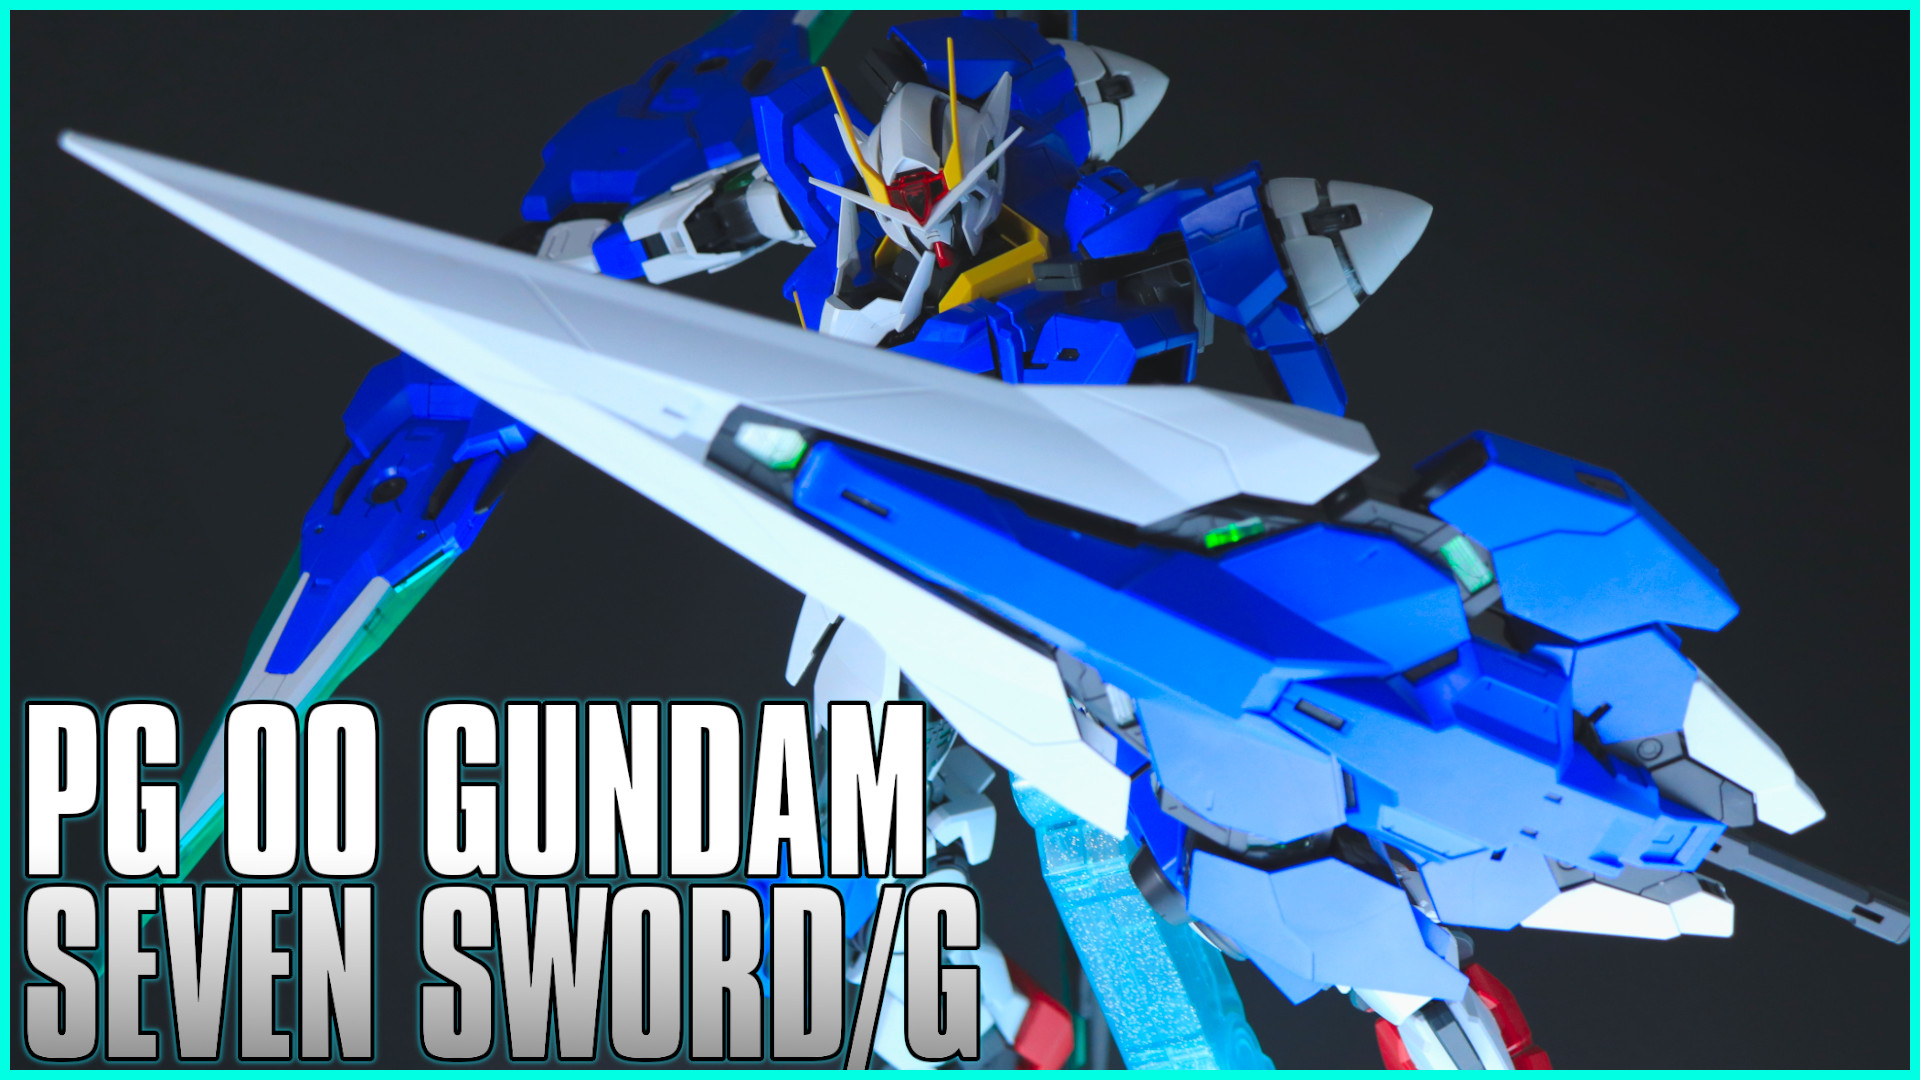 1 60 Scale Pg 00 Gundam Seven Sword G By Bandai